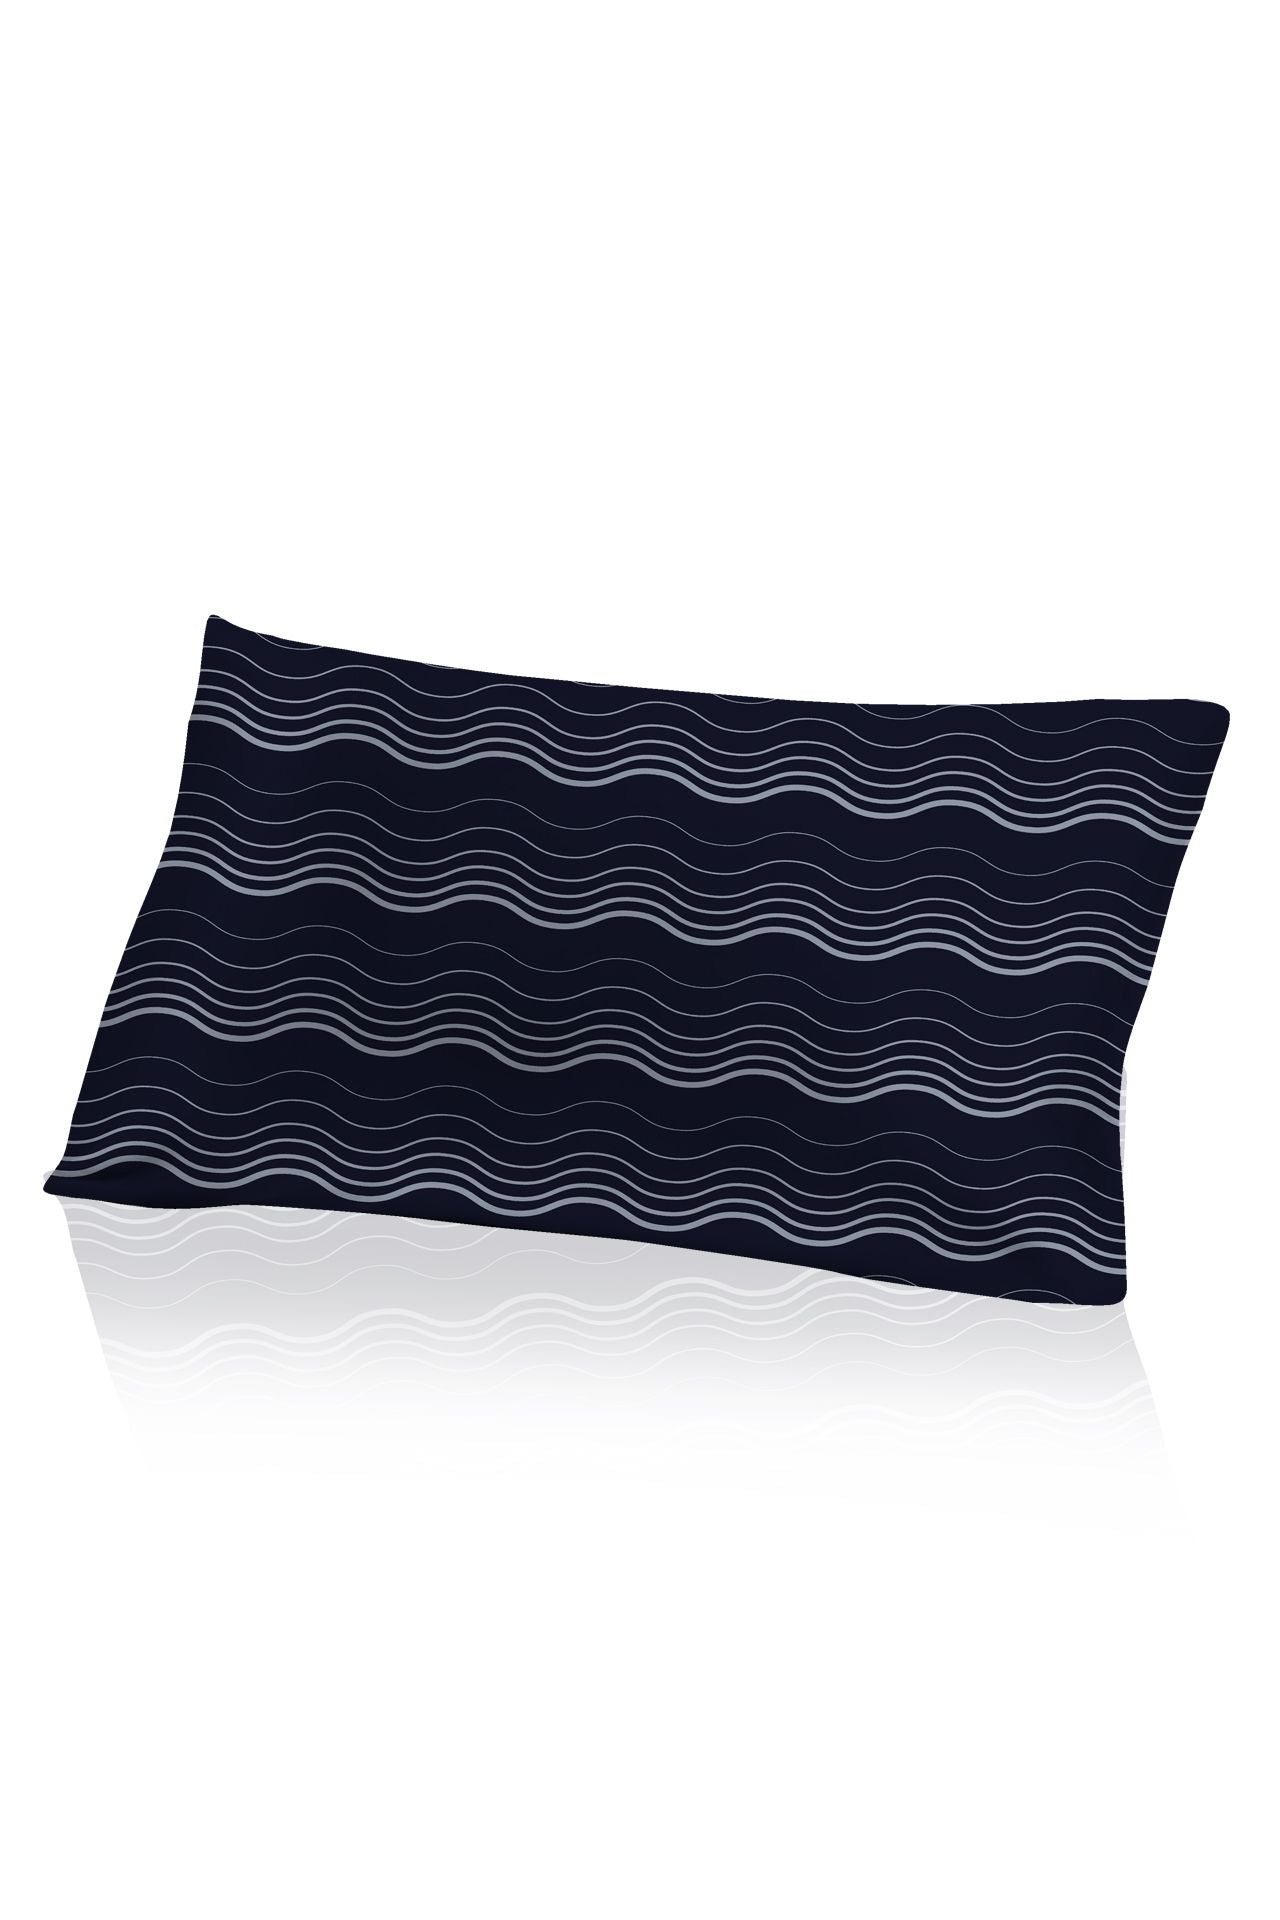 "printed pillow cases" "best decorative pillows" "Kyle X Shahida" "modern pillow throw"